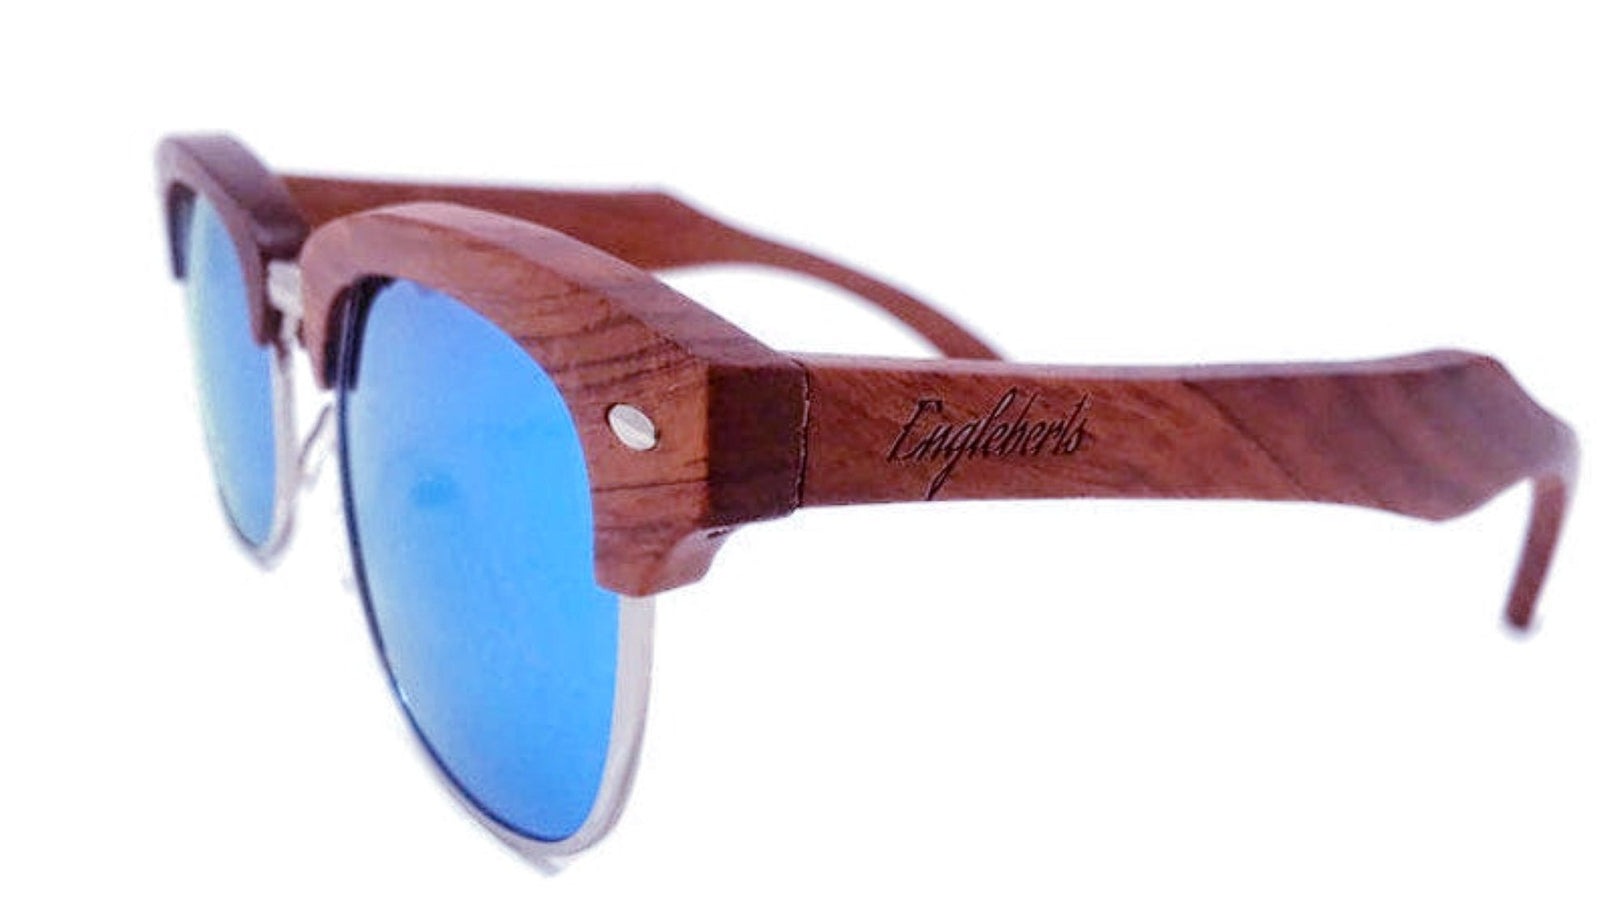 Brazilian Pear Wood Sunglasses, Ice Blue Polarized Lenses